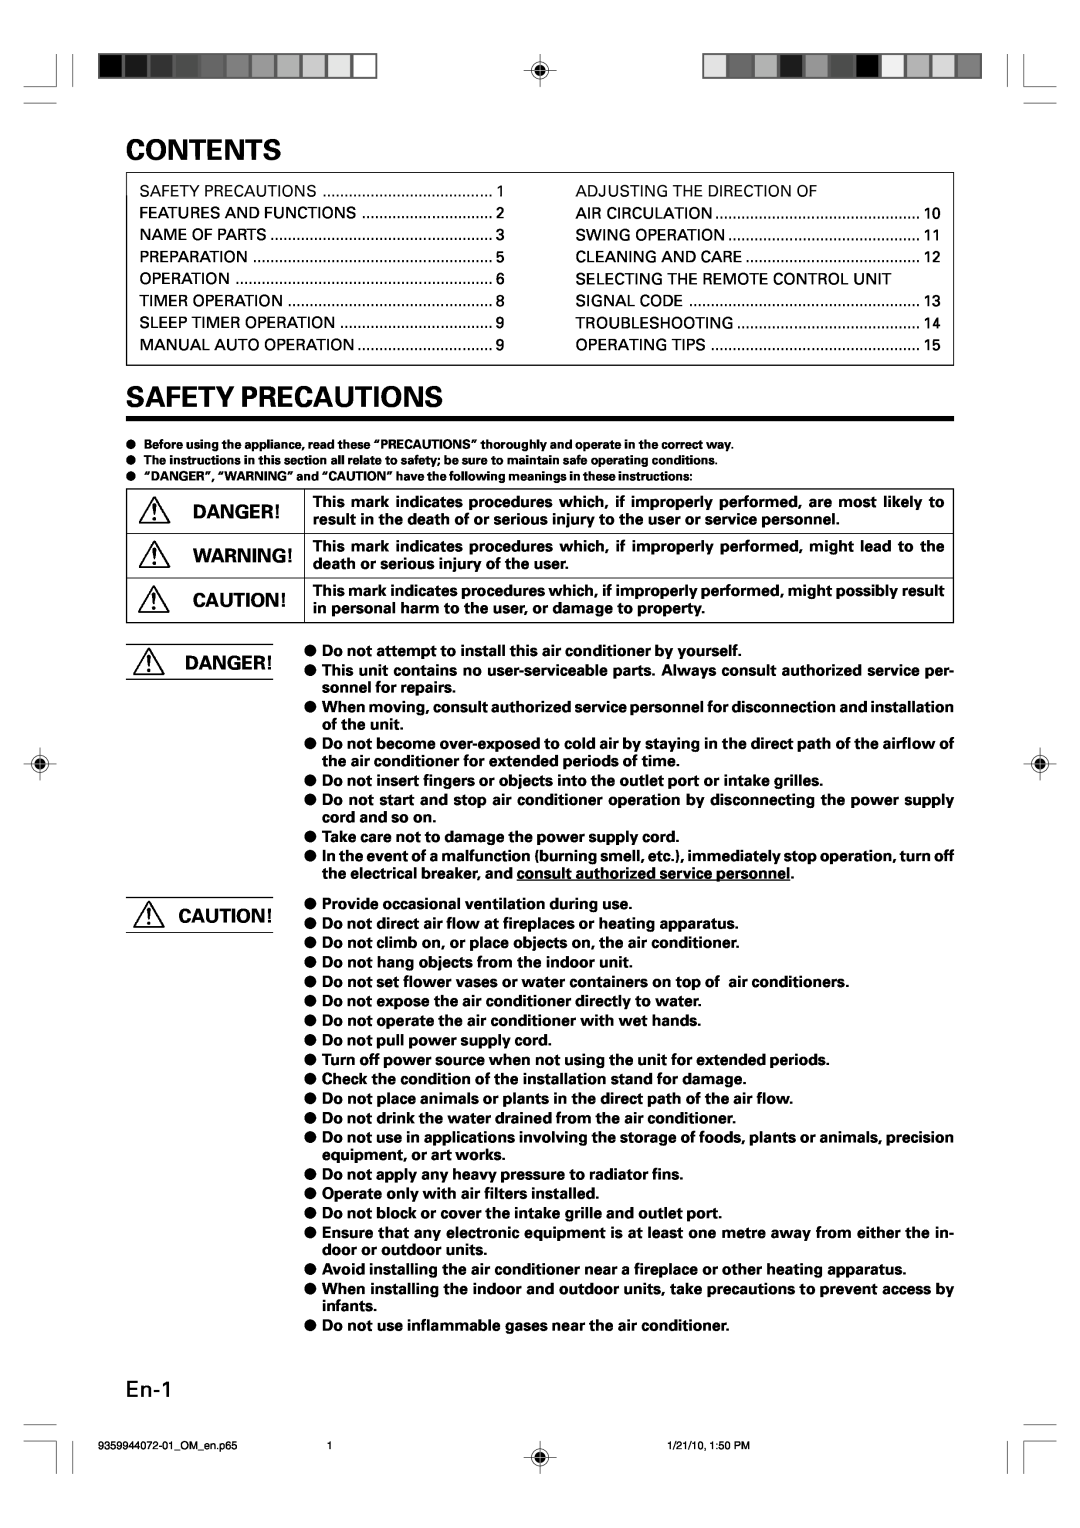 Friedrich P/N9359944072-01 manual Contents, Safety Precautions, En-1, Danger 